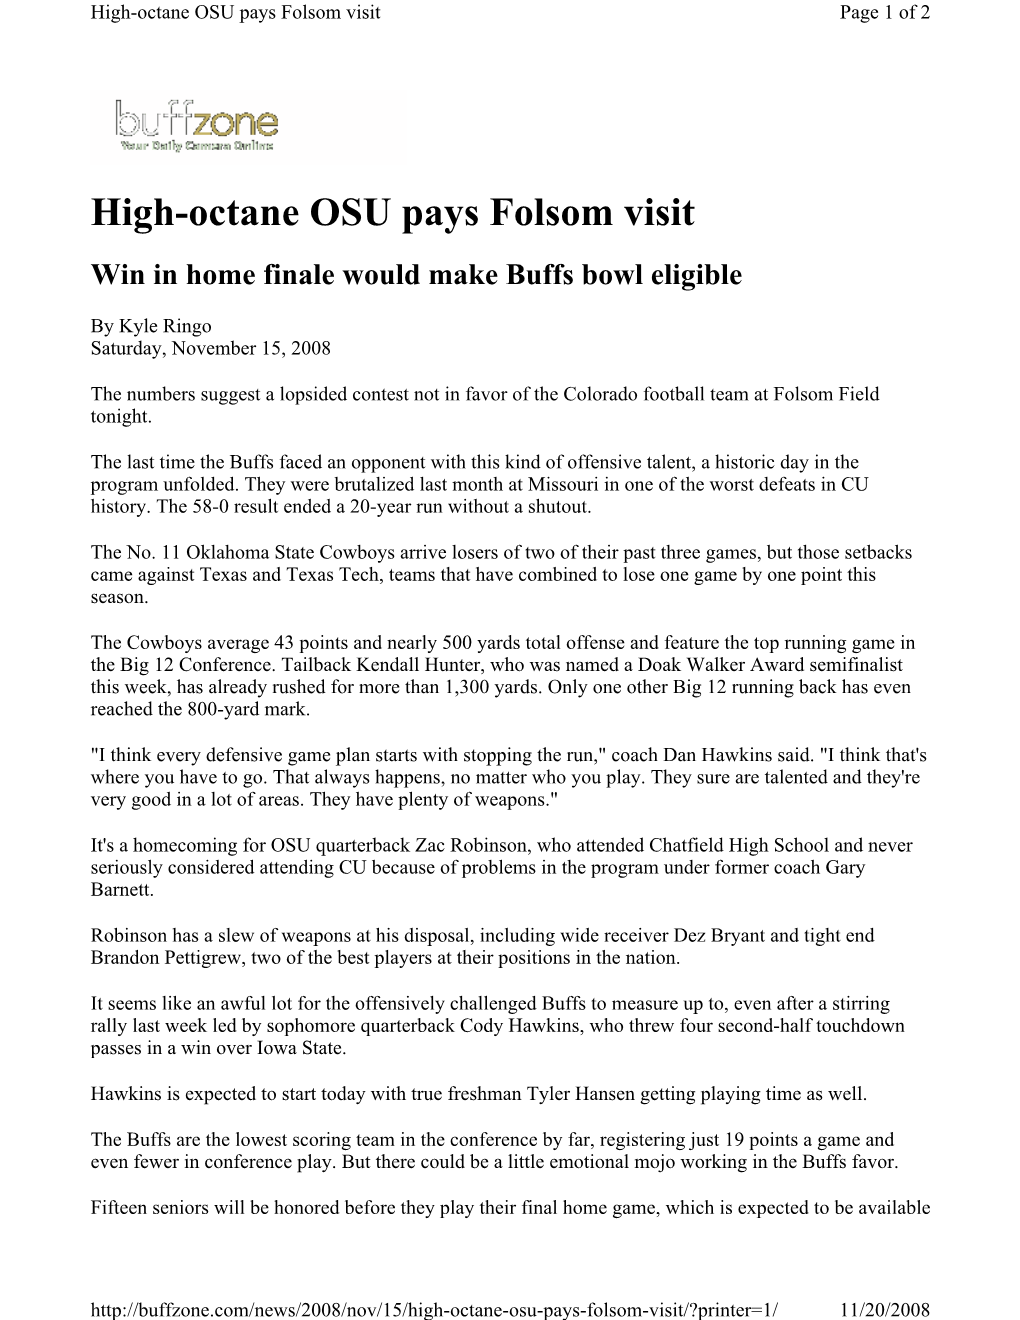 High-Octane OSU Pays Folsom Visit Page 1 of 2